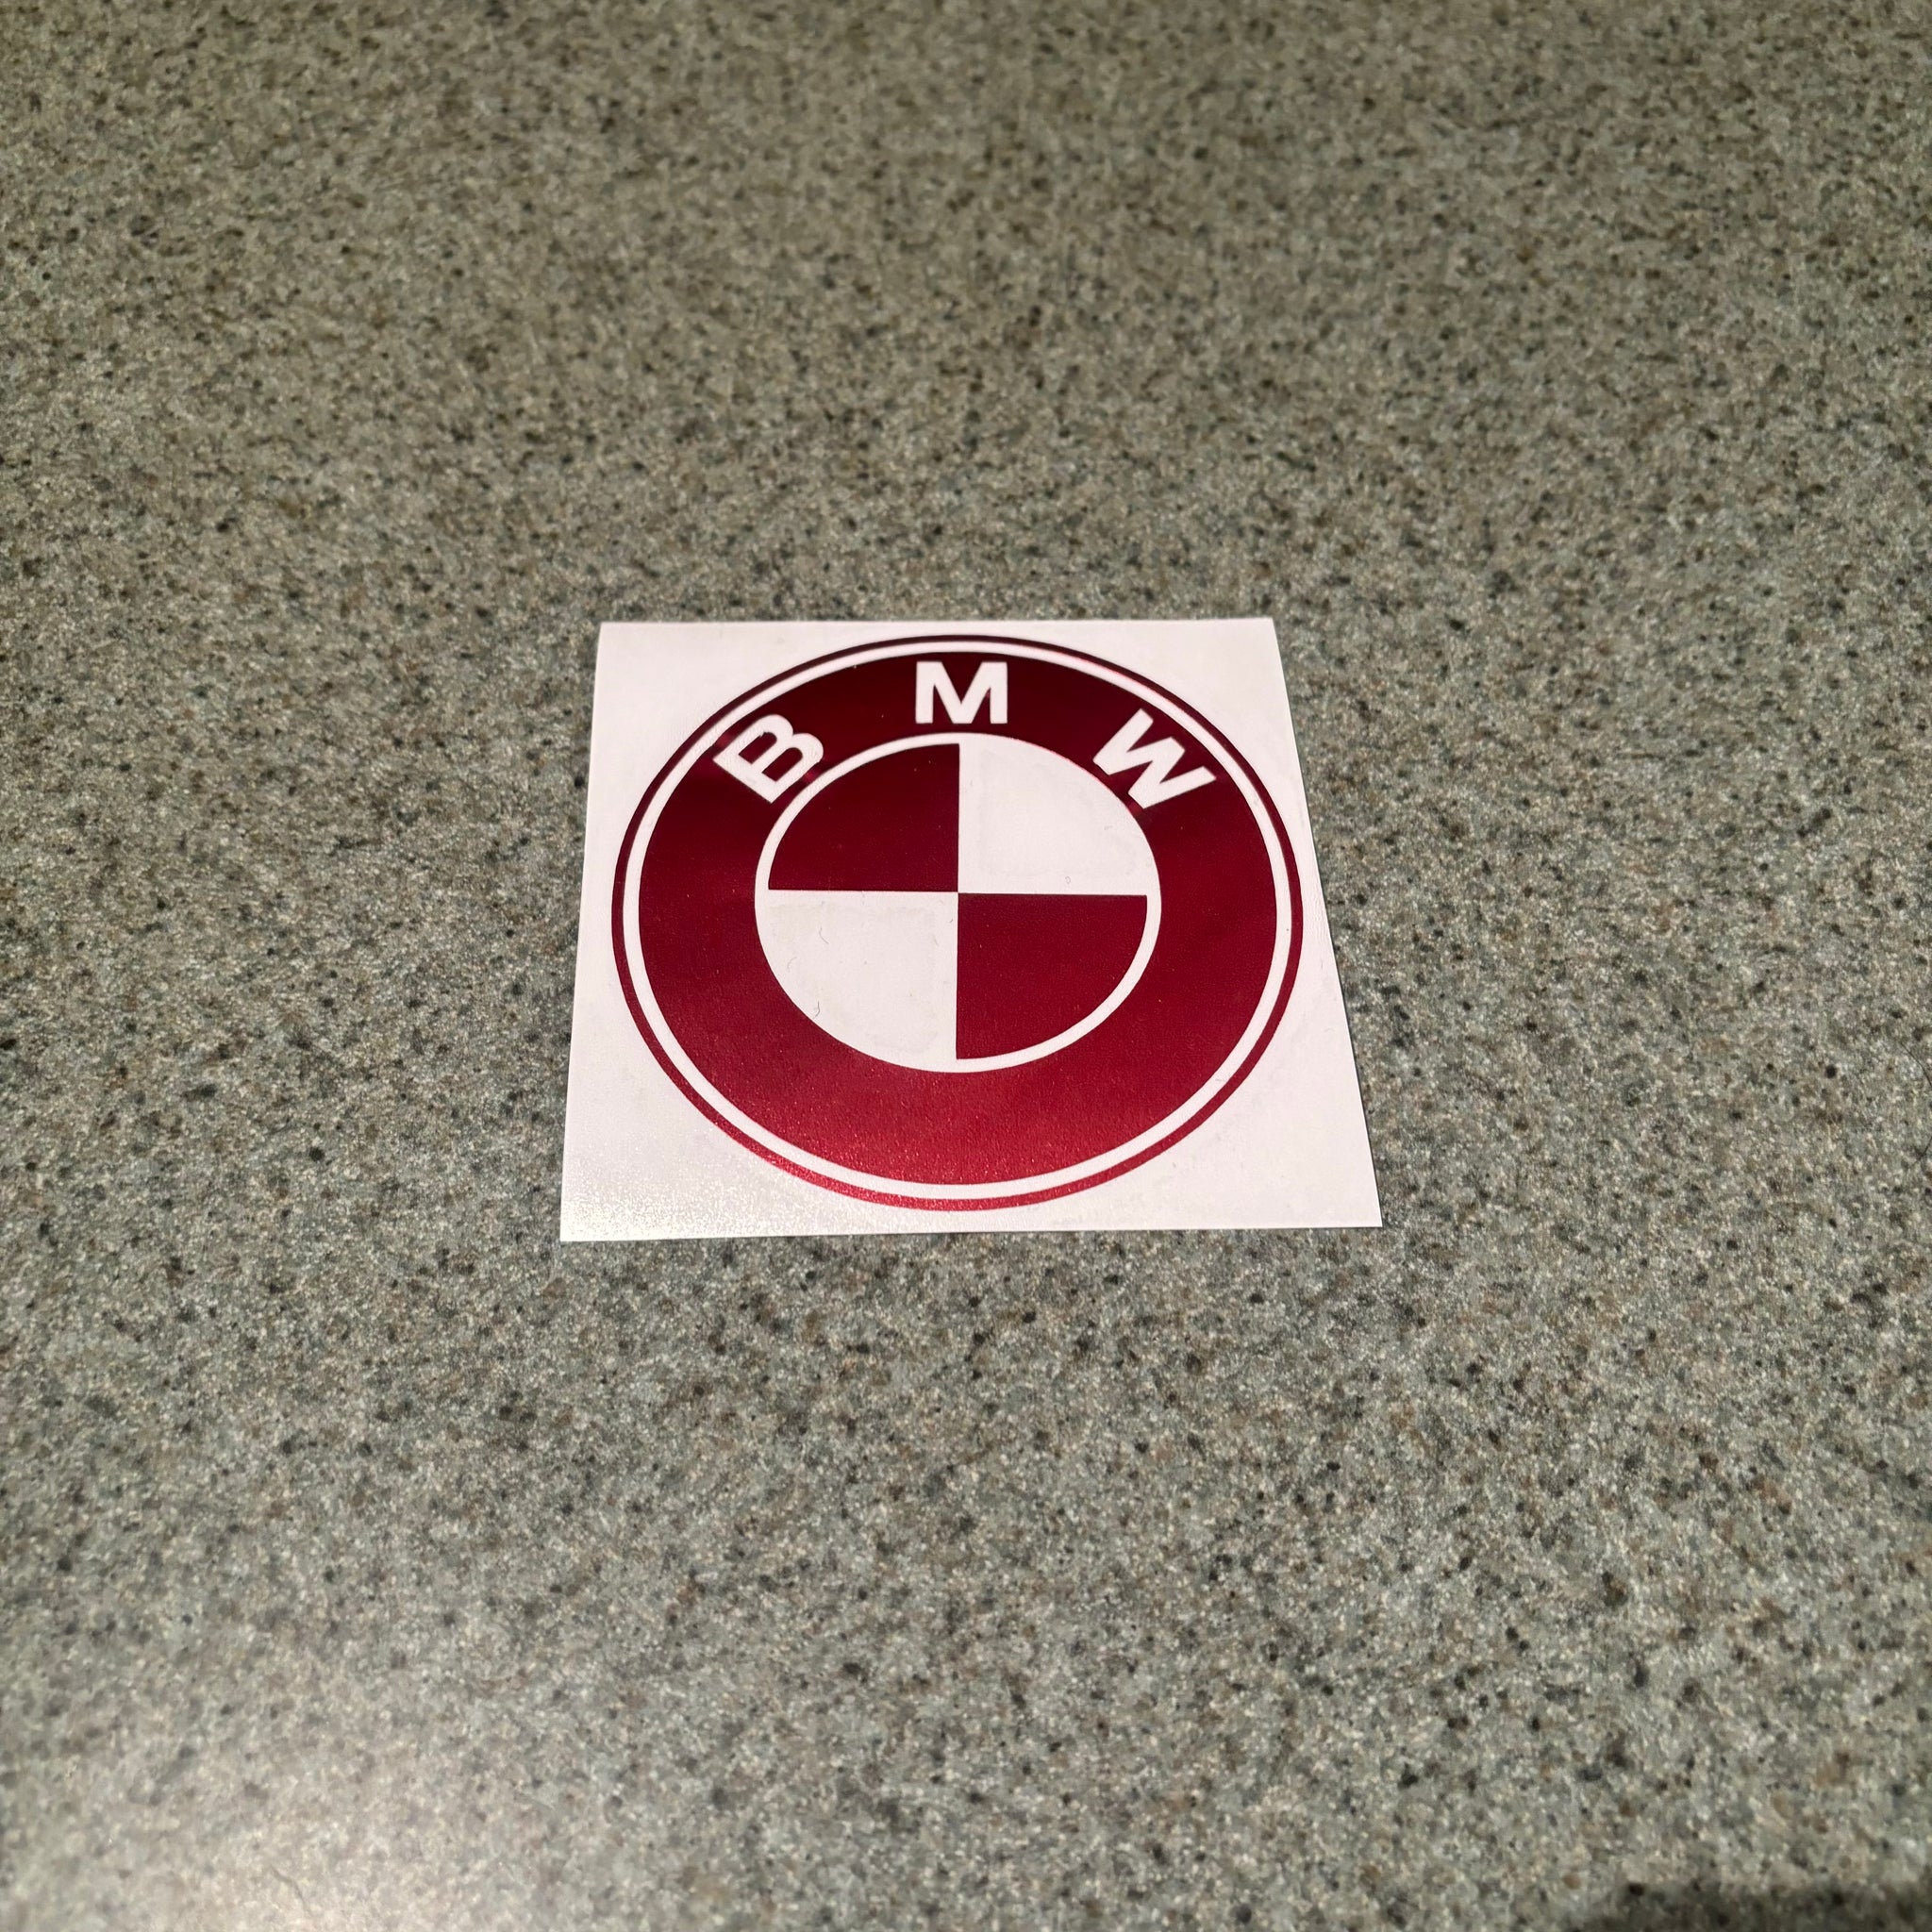 BMW Automobile Logo Vinyl Decal Sticker Laminated - 9.75